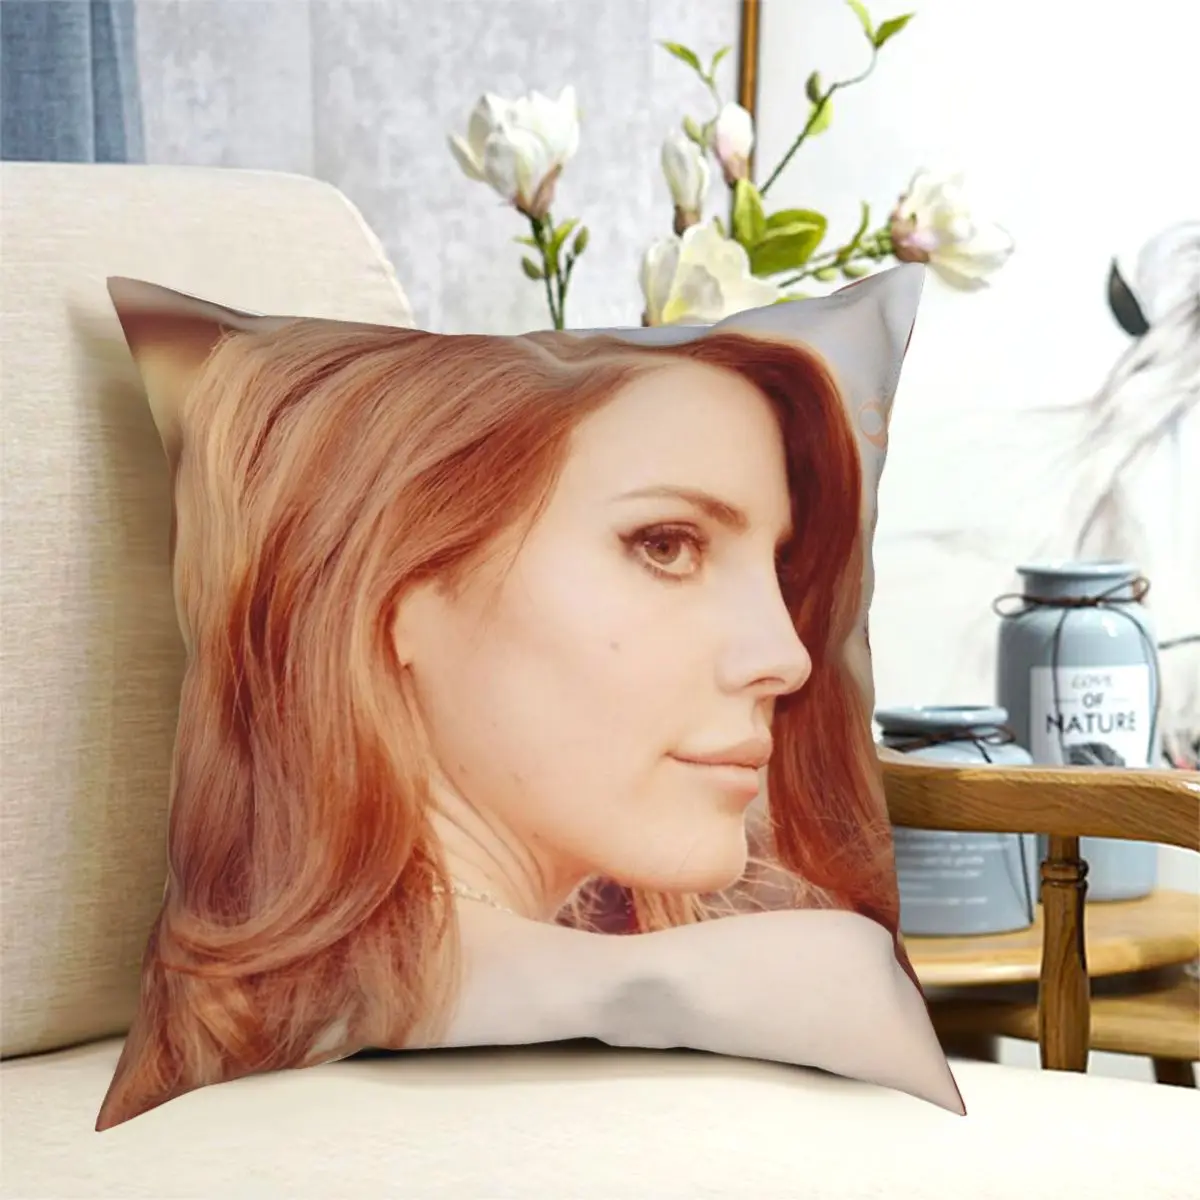 

Lana Del Rey Cushions for Sofa Funny Pillowcase Decorative Throw Pillows Cover floor pillow for sofa home